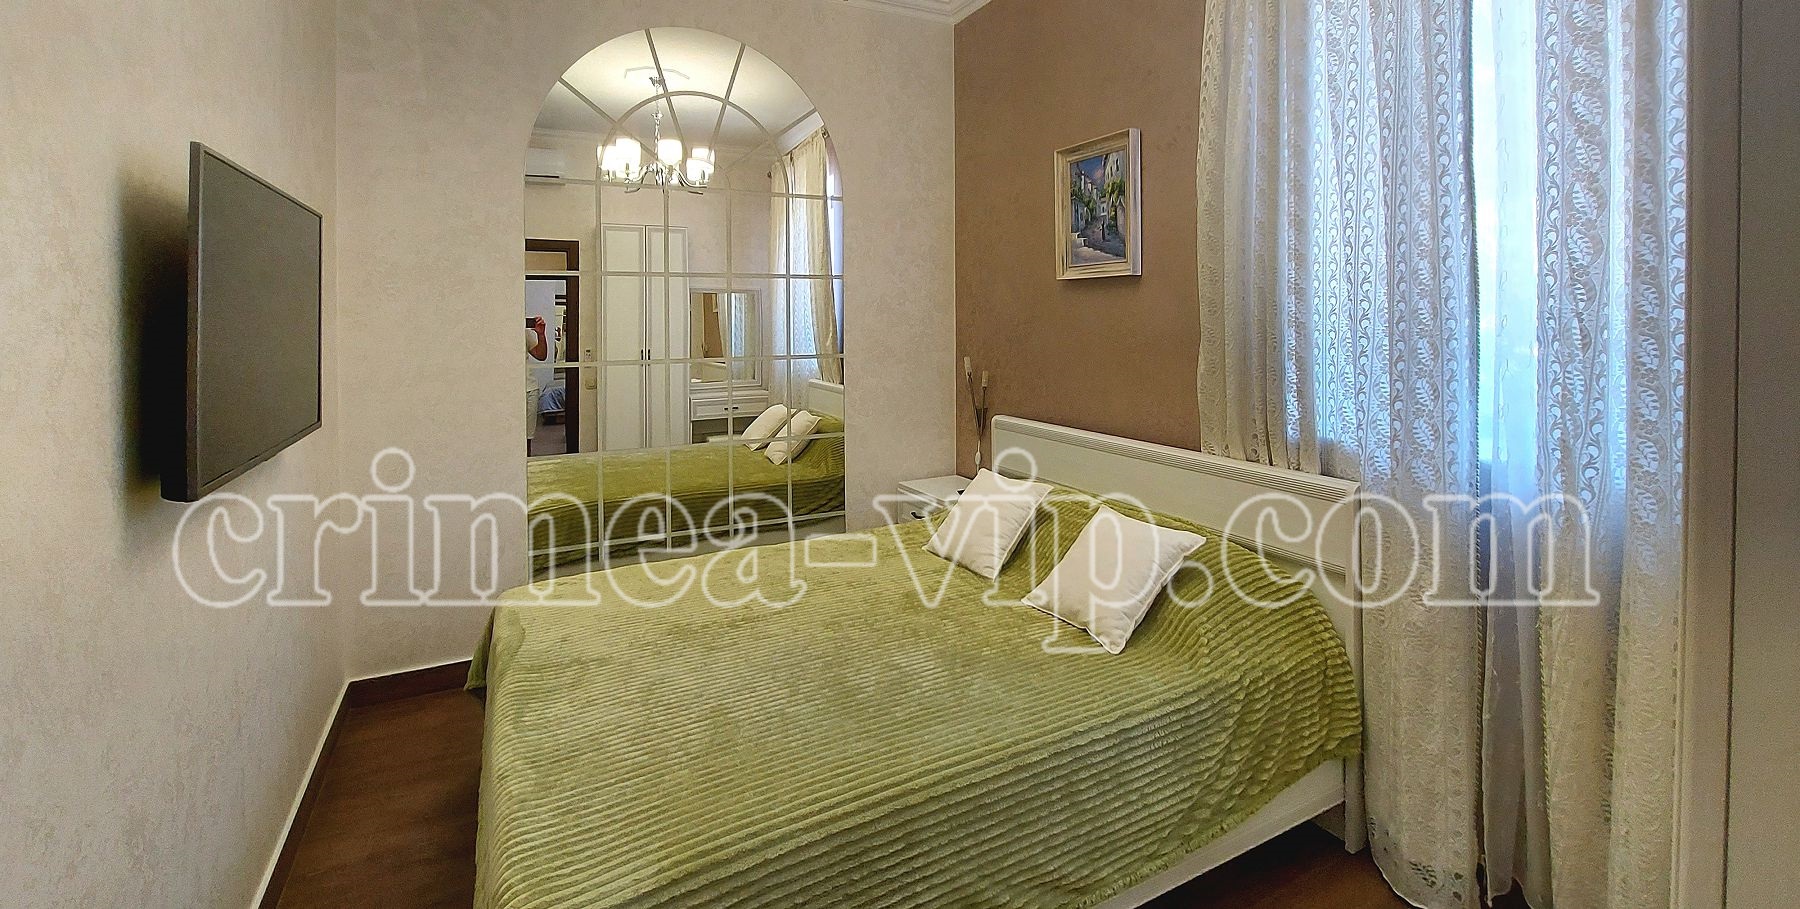 АПД-3010. Апартаменты на 2 спальни в Бекетово.